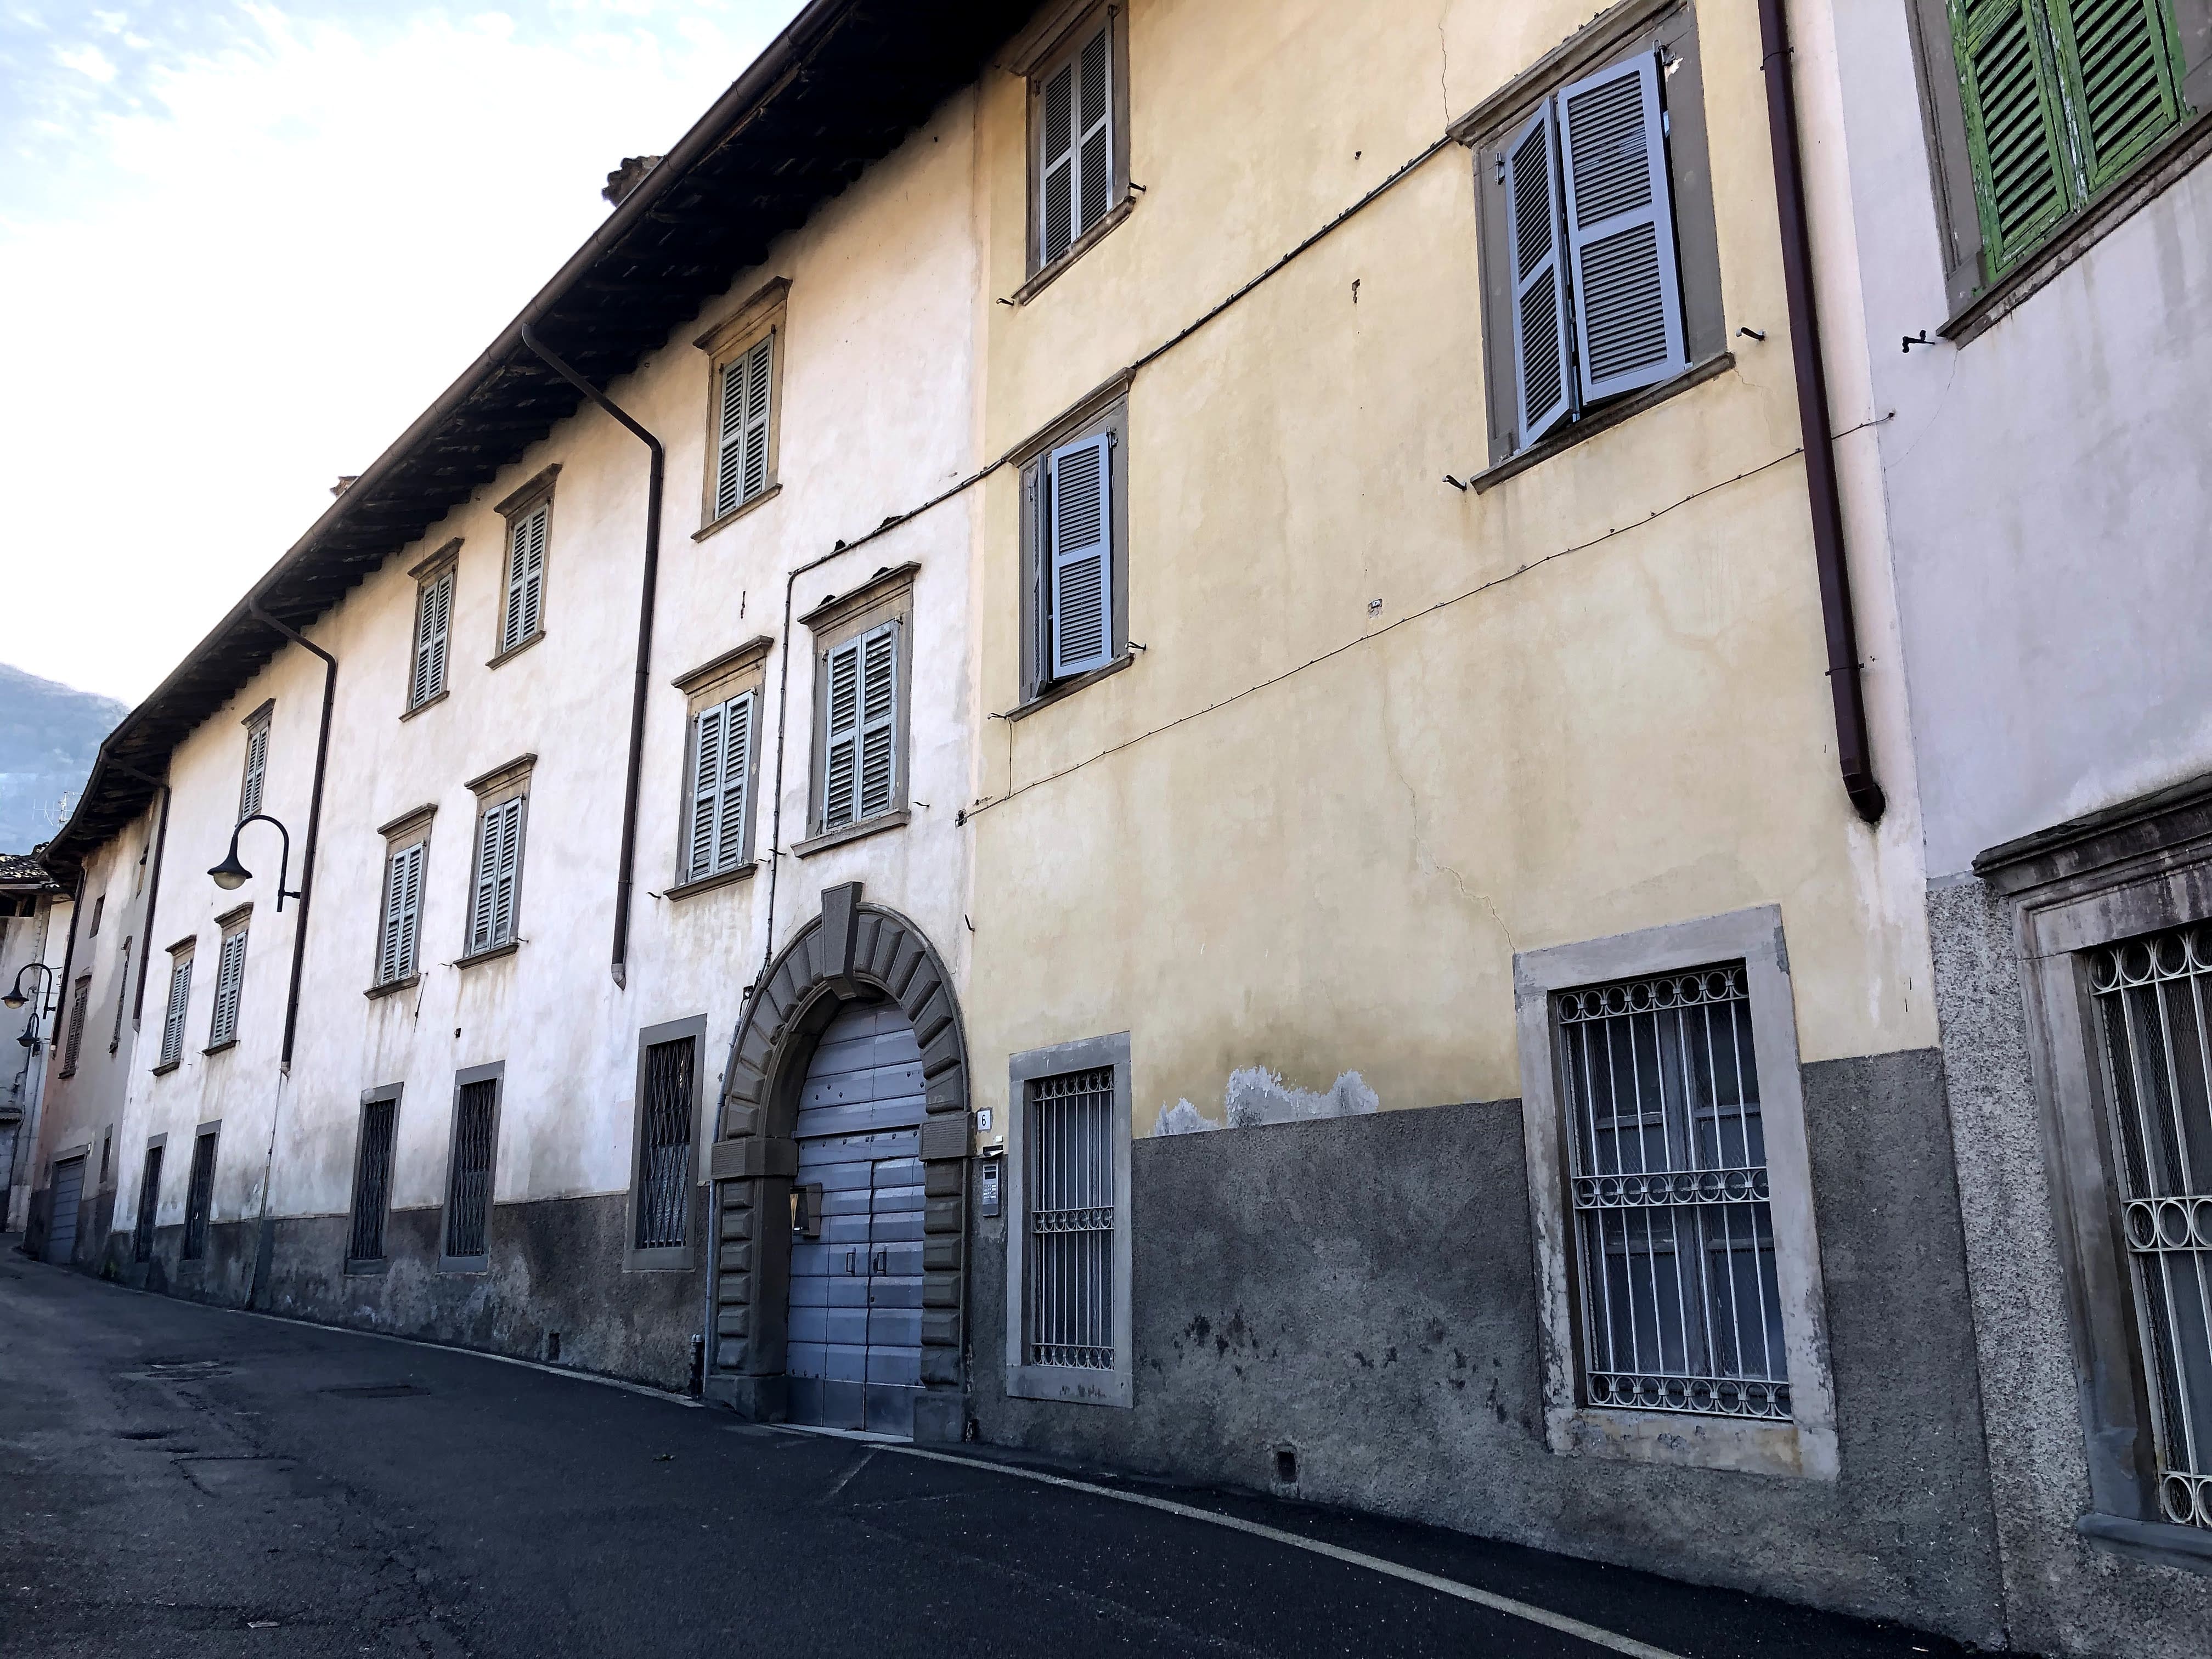 Casa in via Crispi (già Palazzo Radici) (casa, privata) - Gandino (BG)  (XVII)